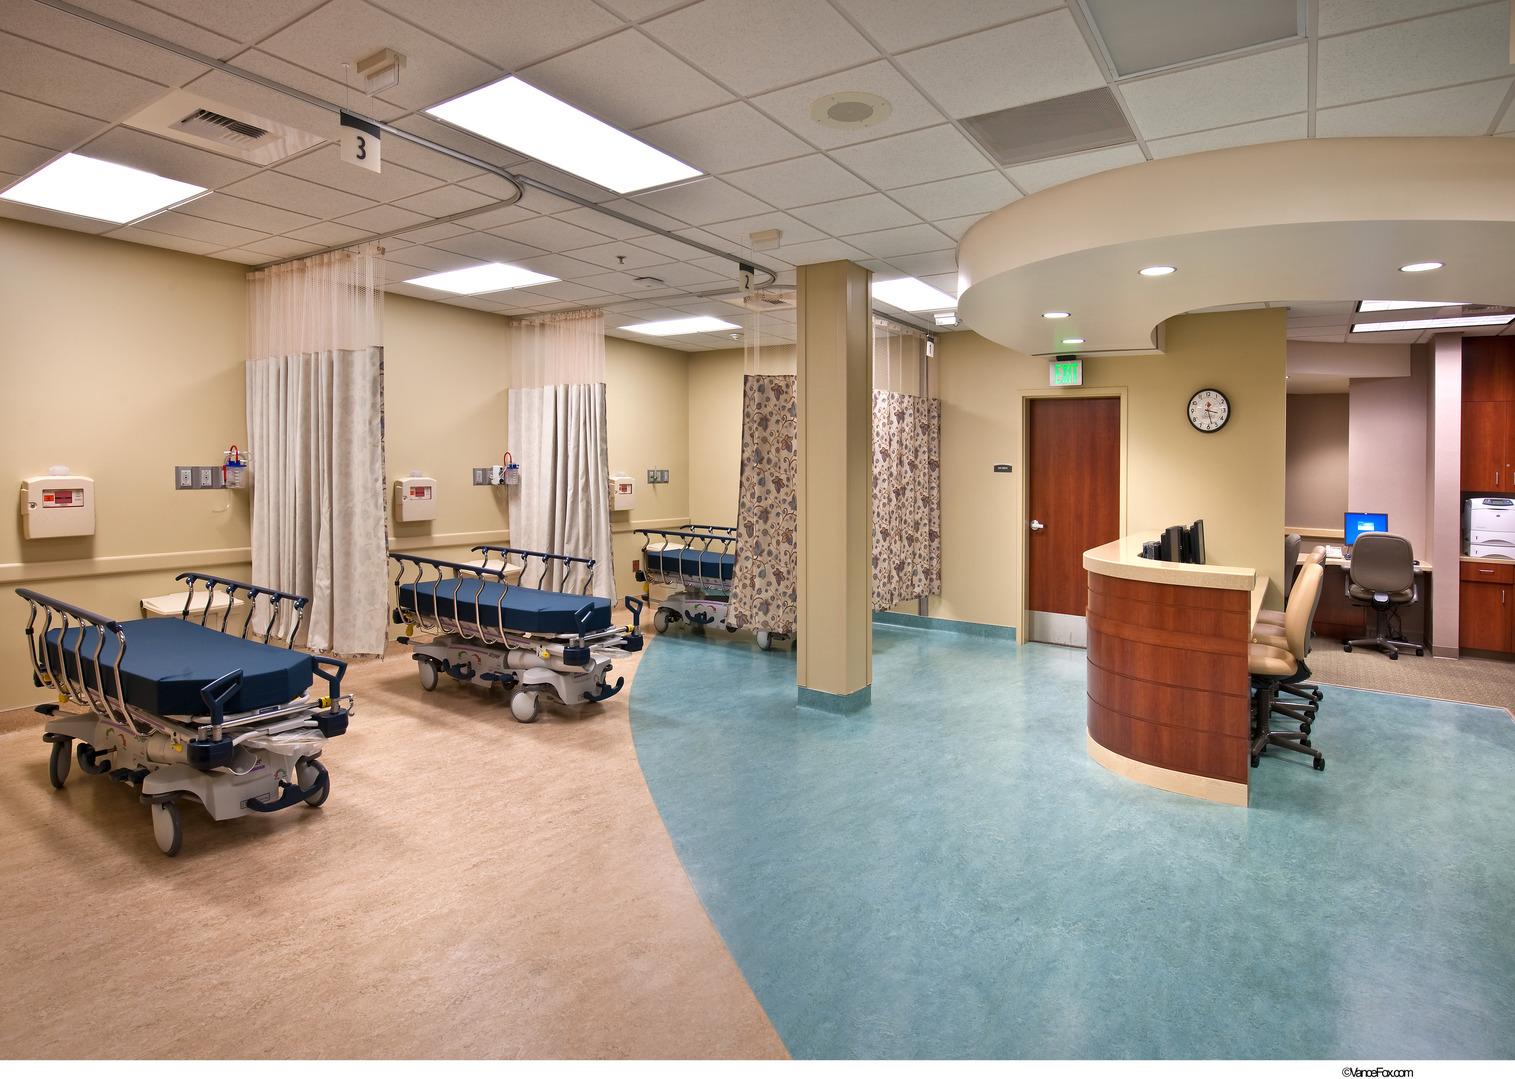 Clovis Community Medical Center, Phase A